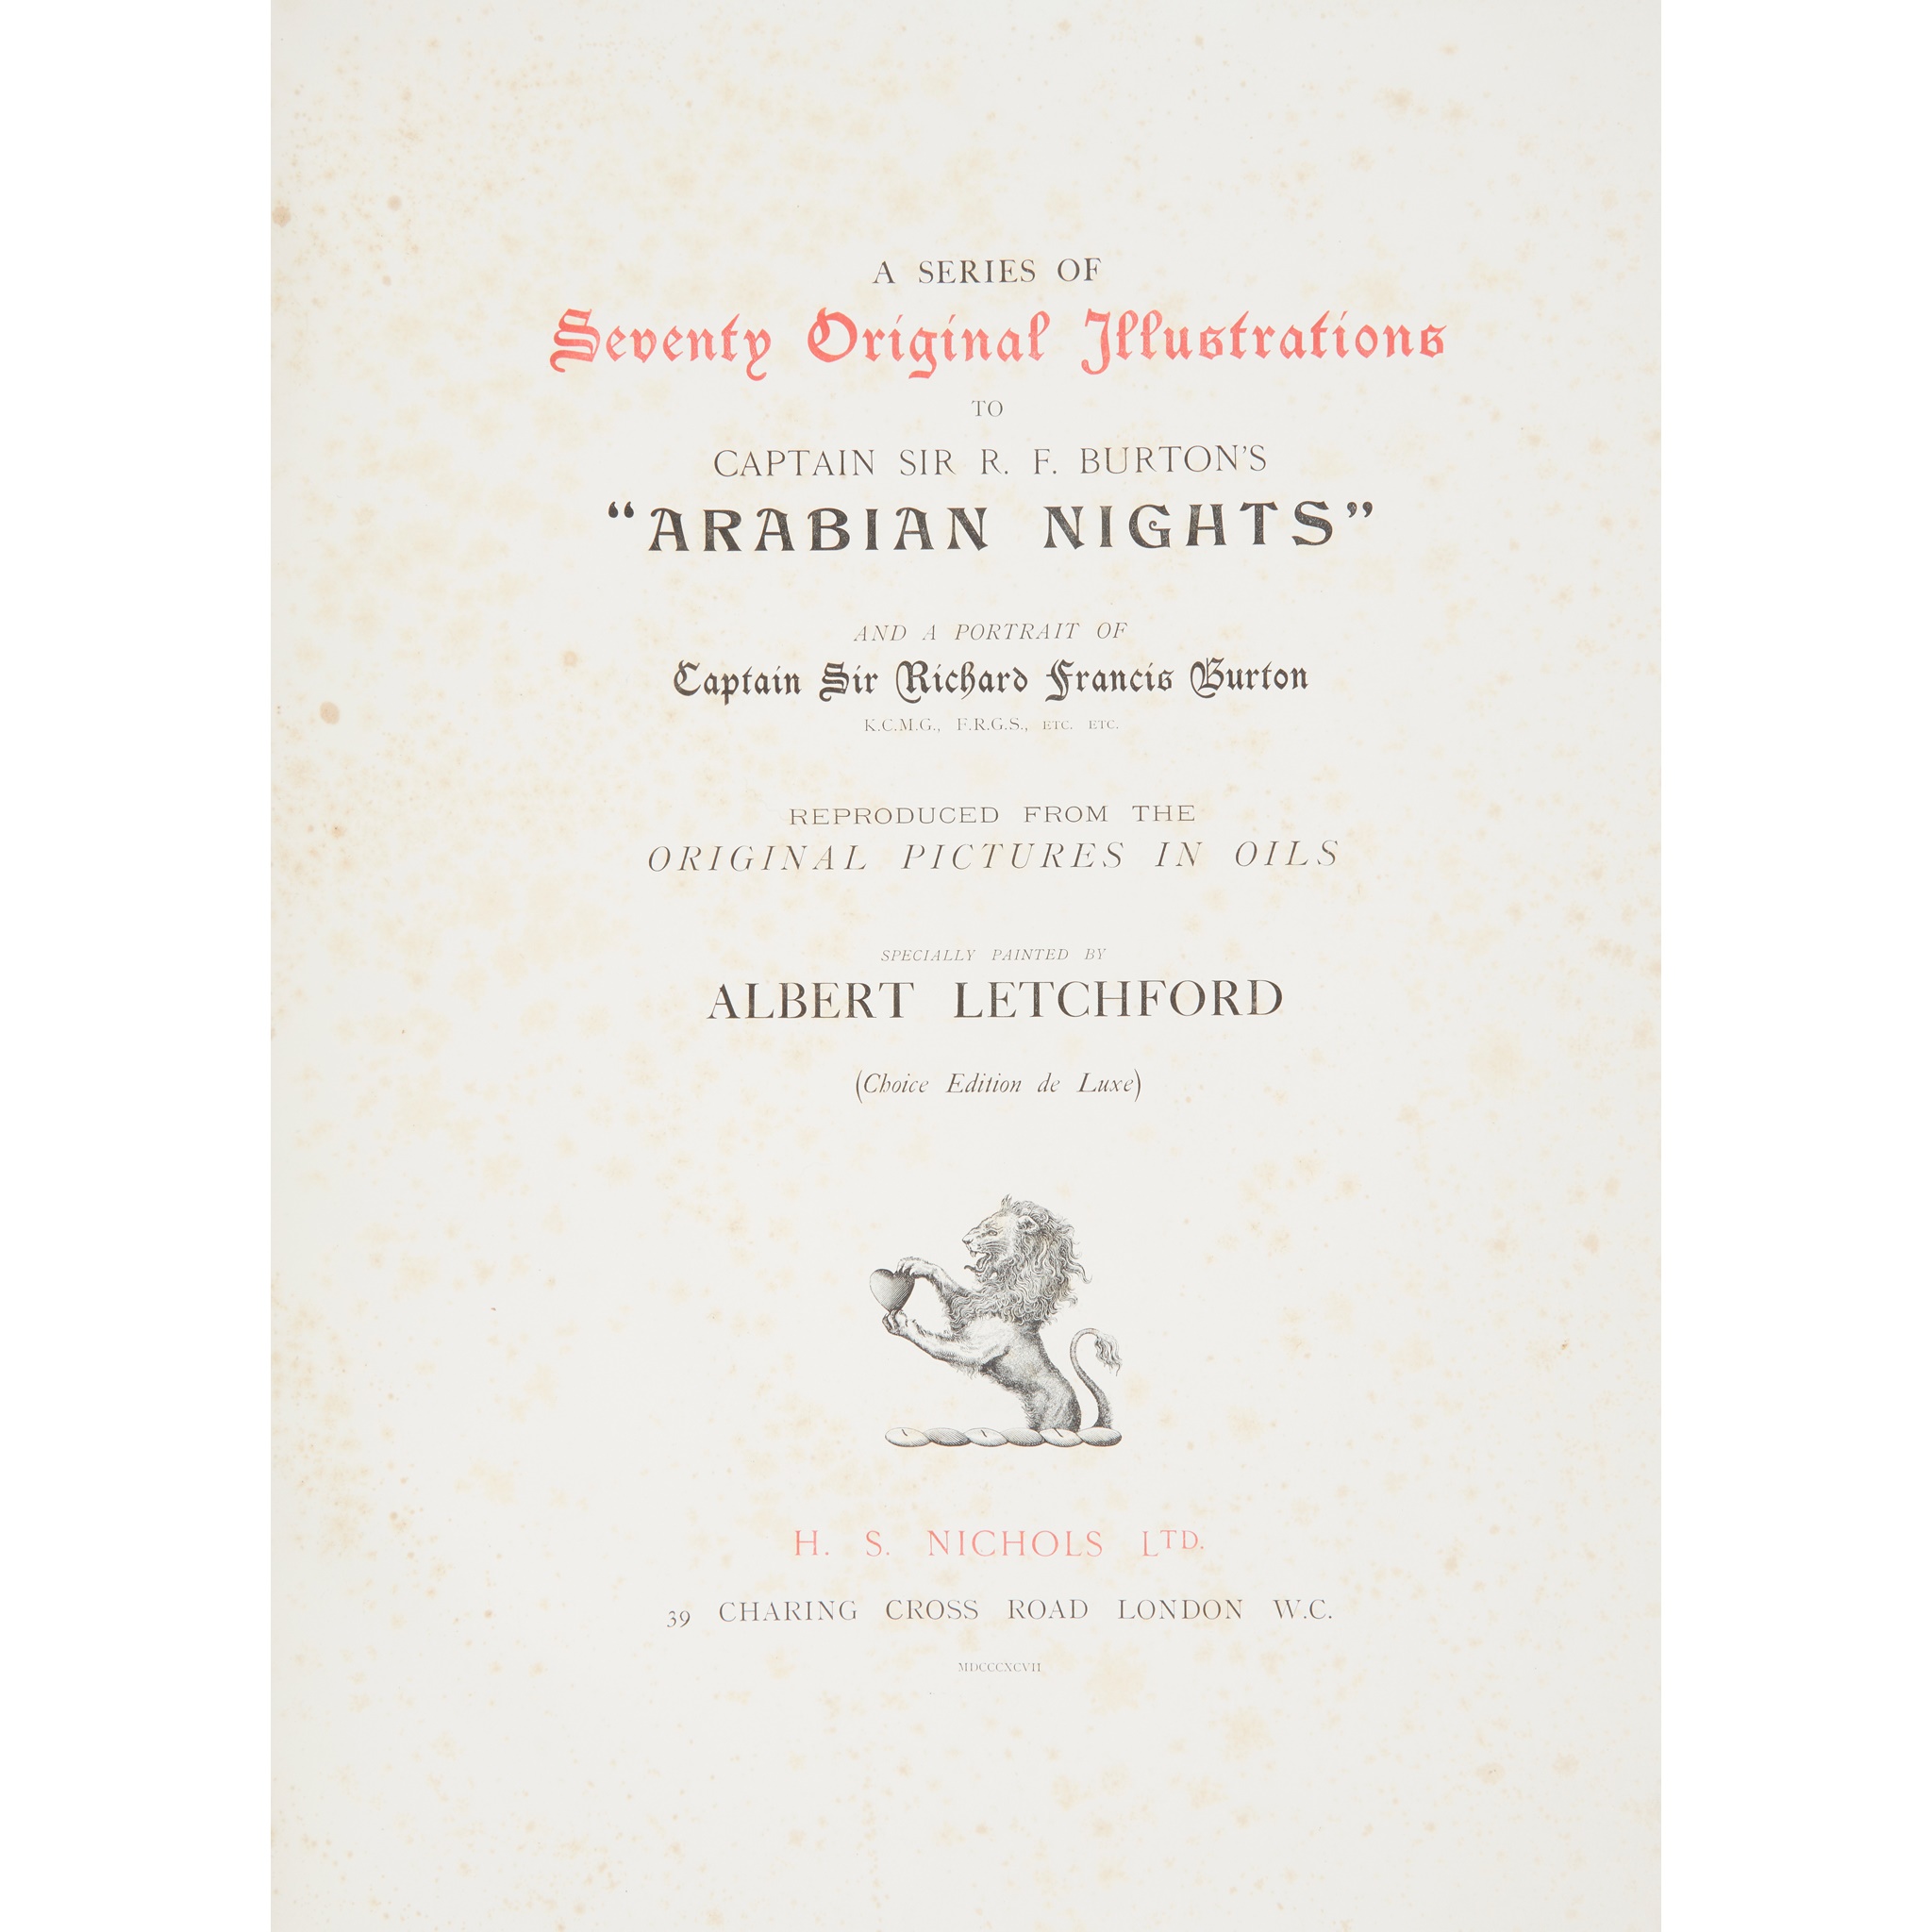 Letchford, Albert, illustrator A Series of Seventy Original Illustrations - Image 2 of 3